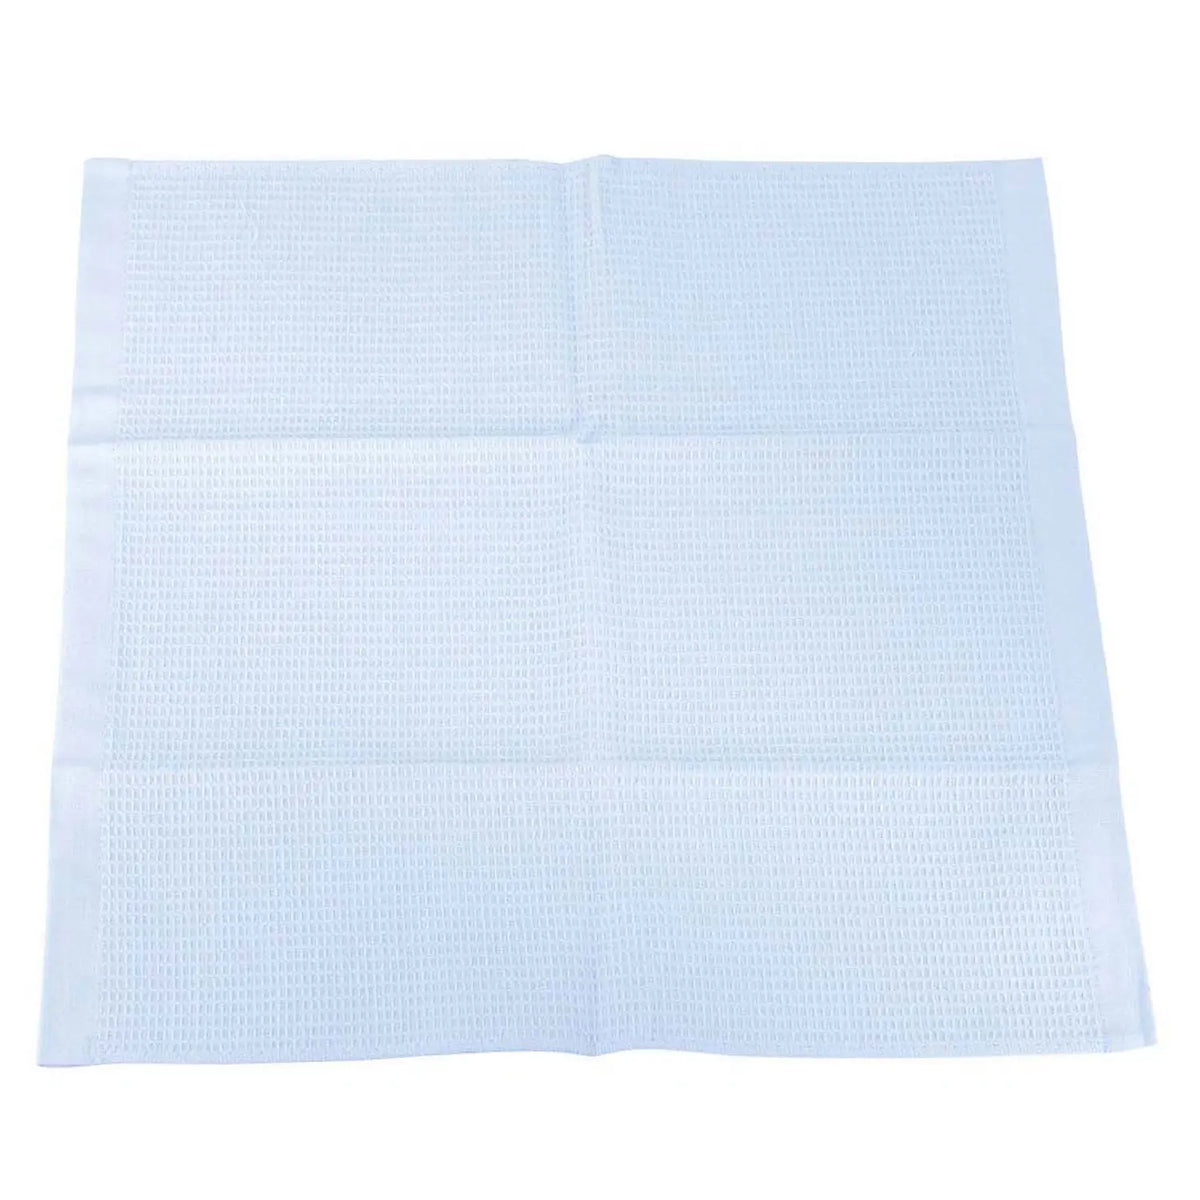 TAKENOTAYORI Cotton Antibacterial Anti-Odor Kitchen Towel 360x350mm